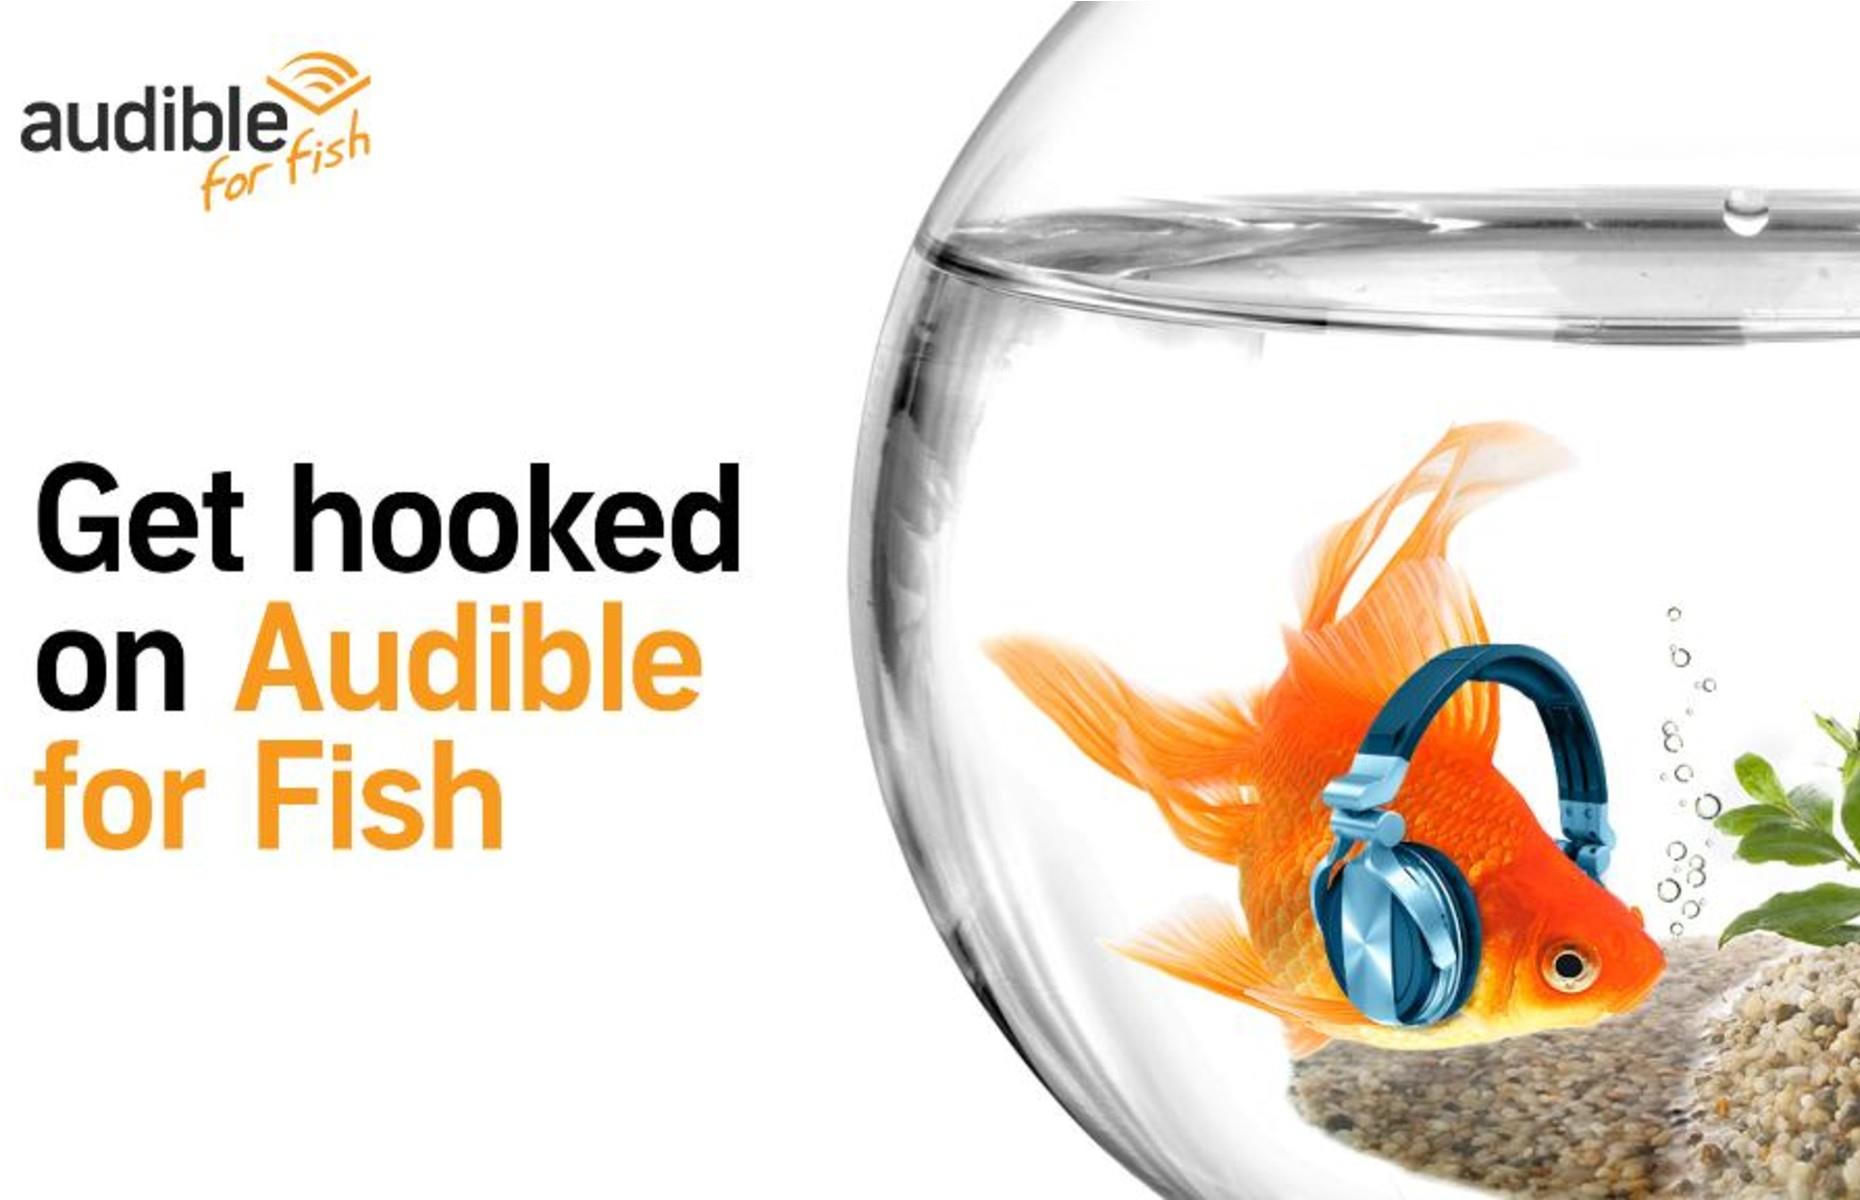 Audible combines audiobooks and aquatics